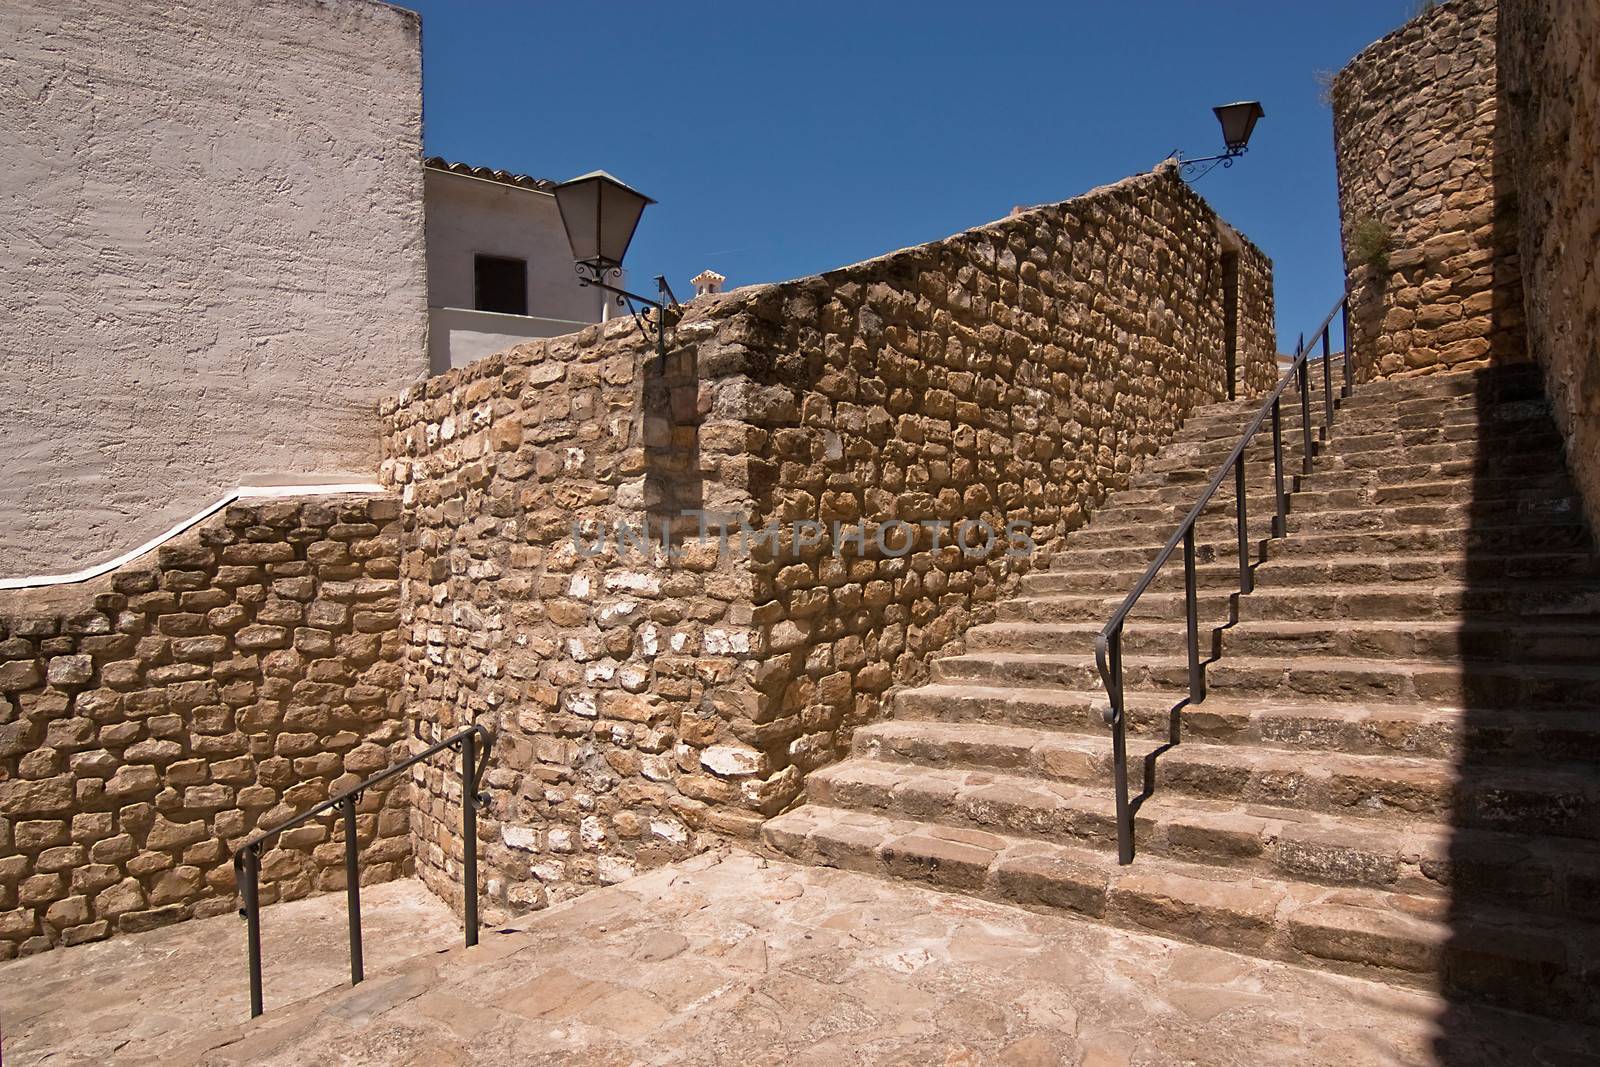 Stairs next to the Mudejar tower, Sabiote, Jaen, Spain